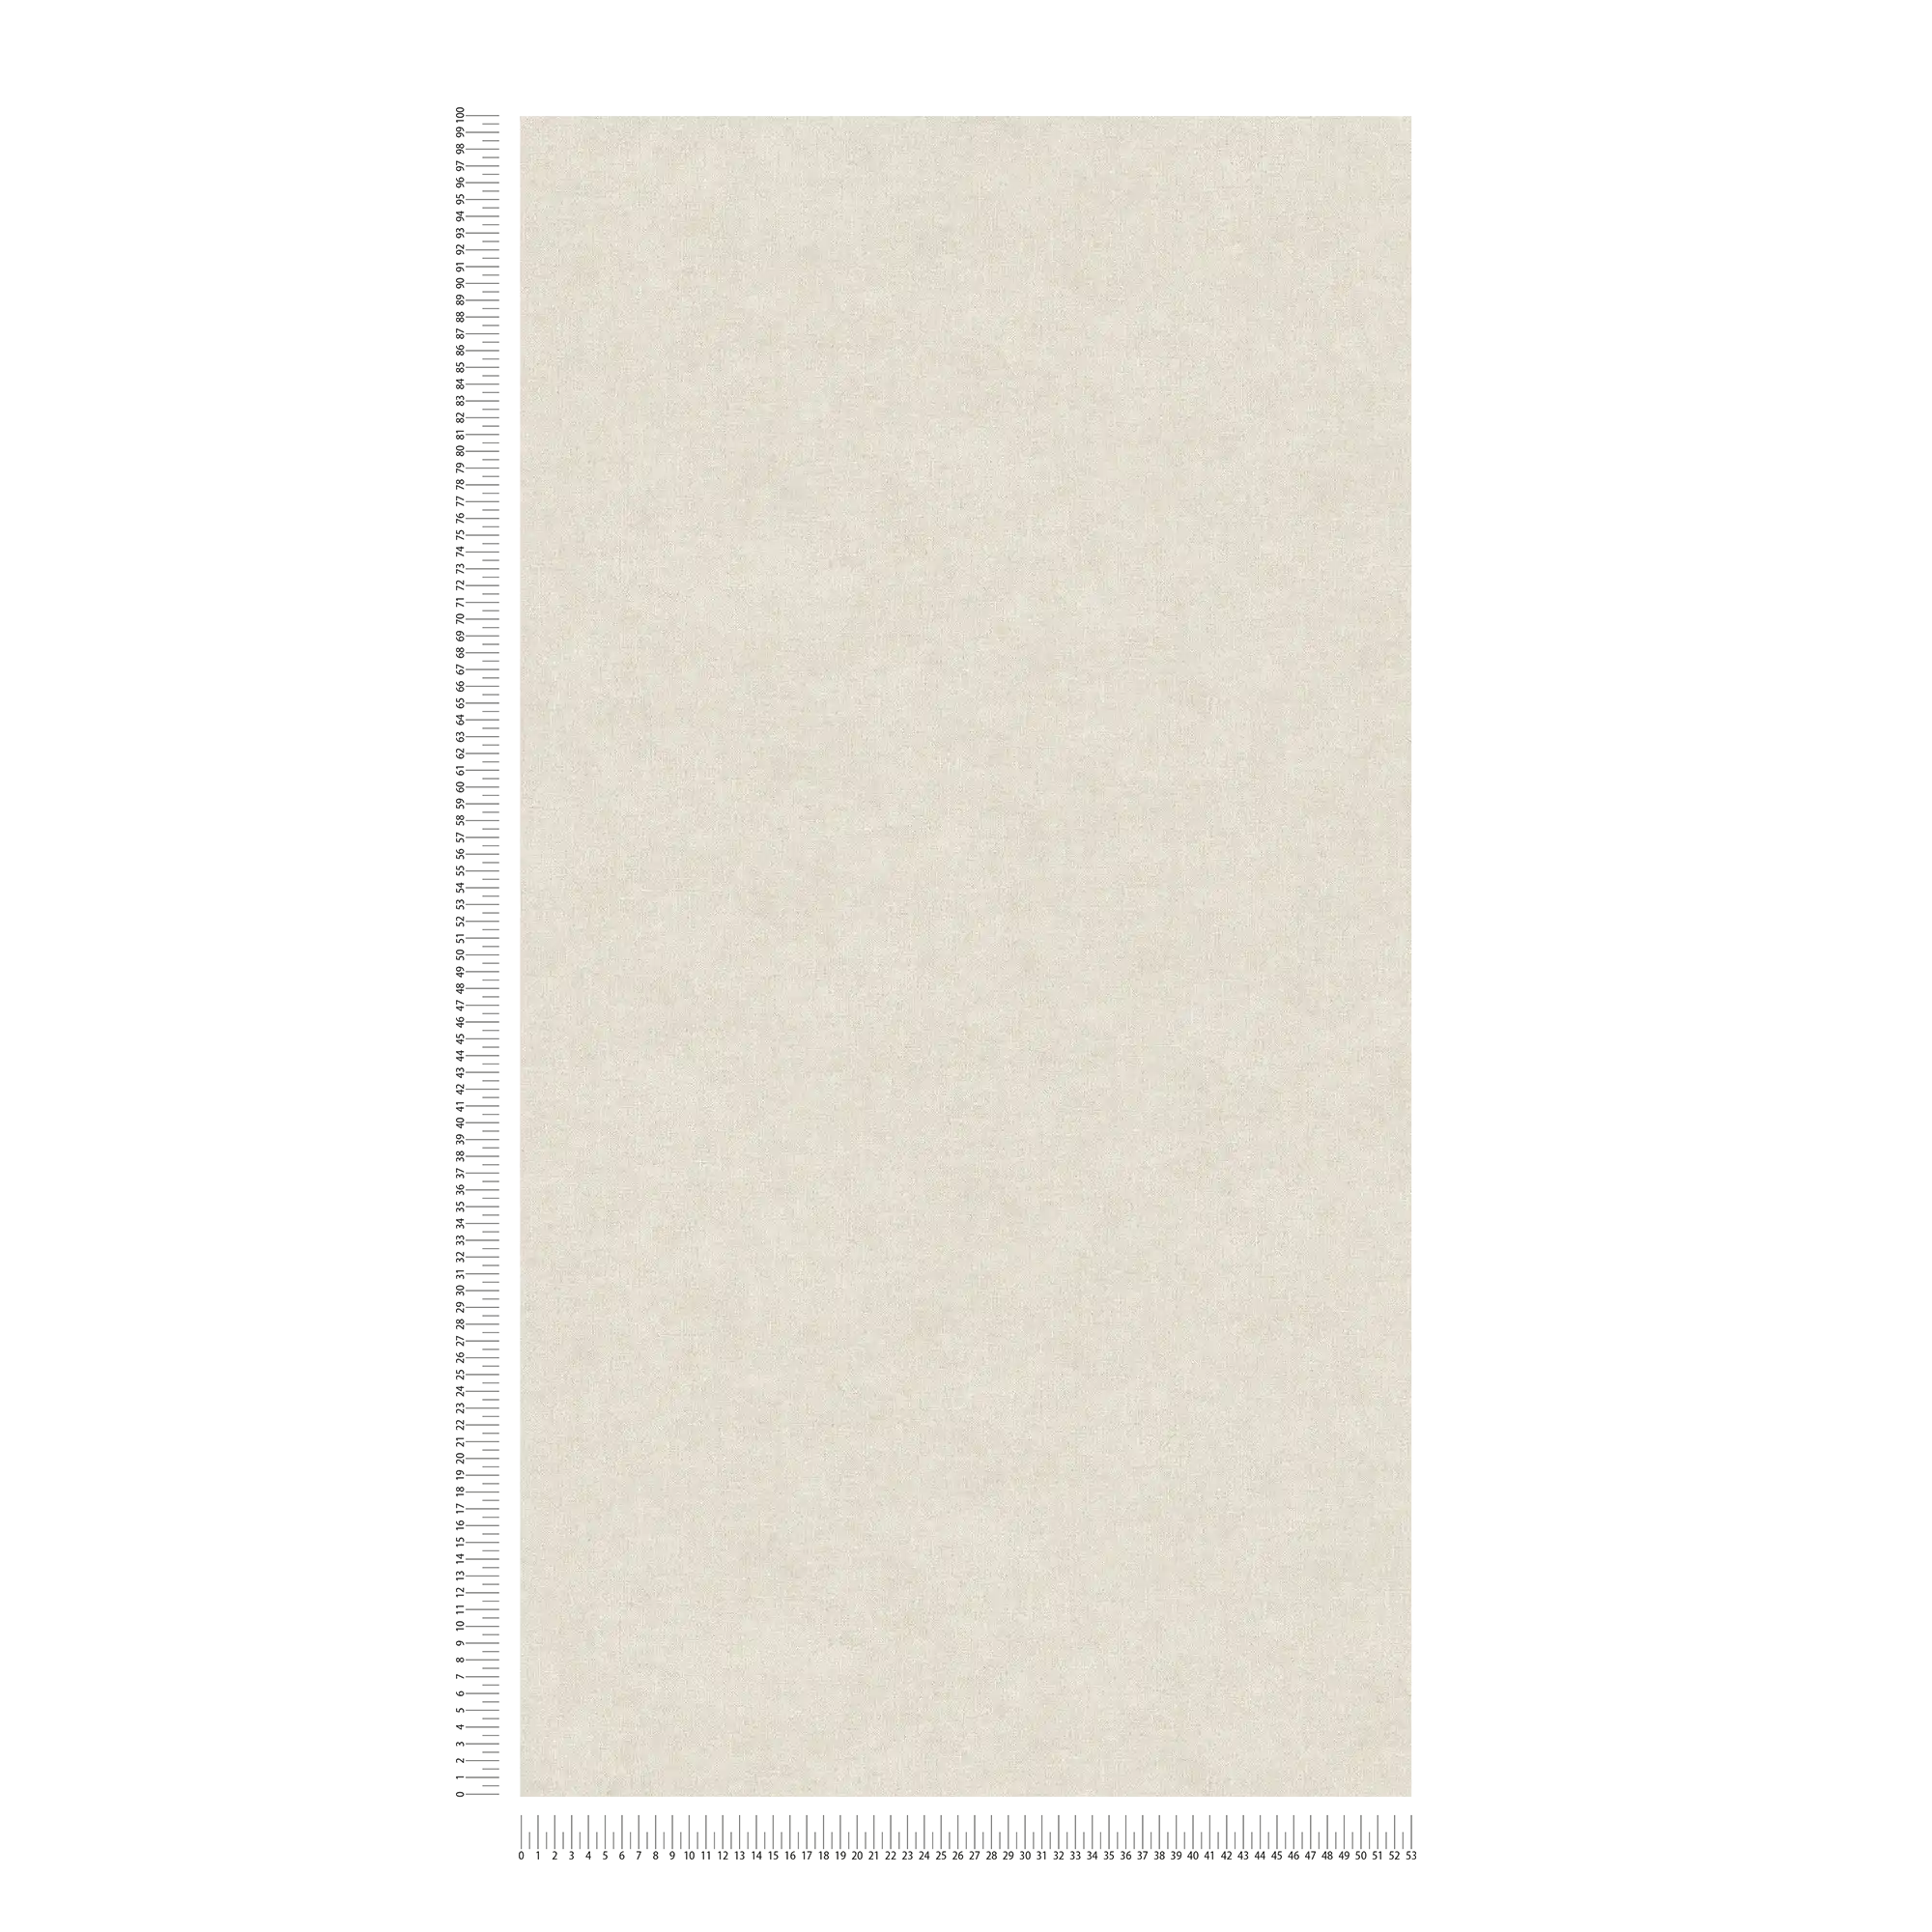             Carta da parati beige in stile boho a tinta unita, opaca e con motivo a struttura
        